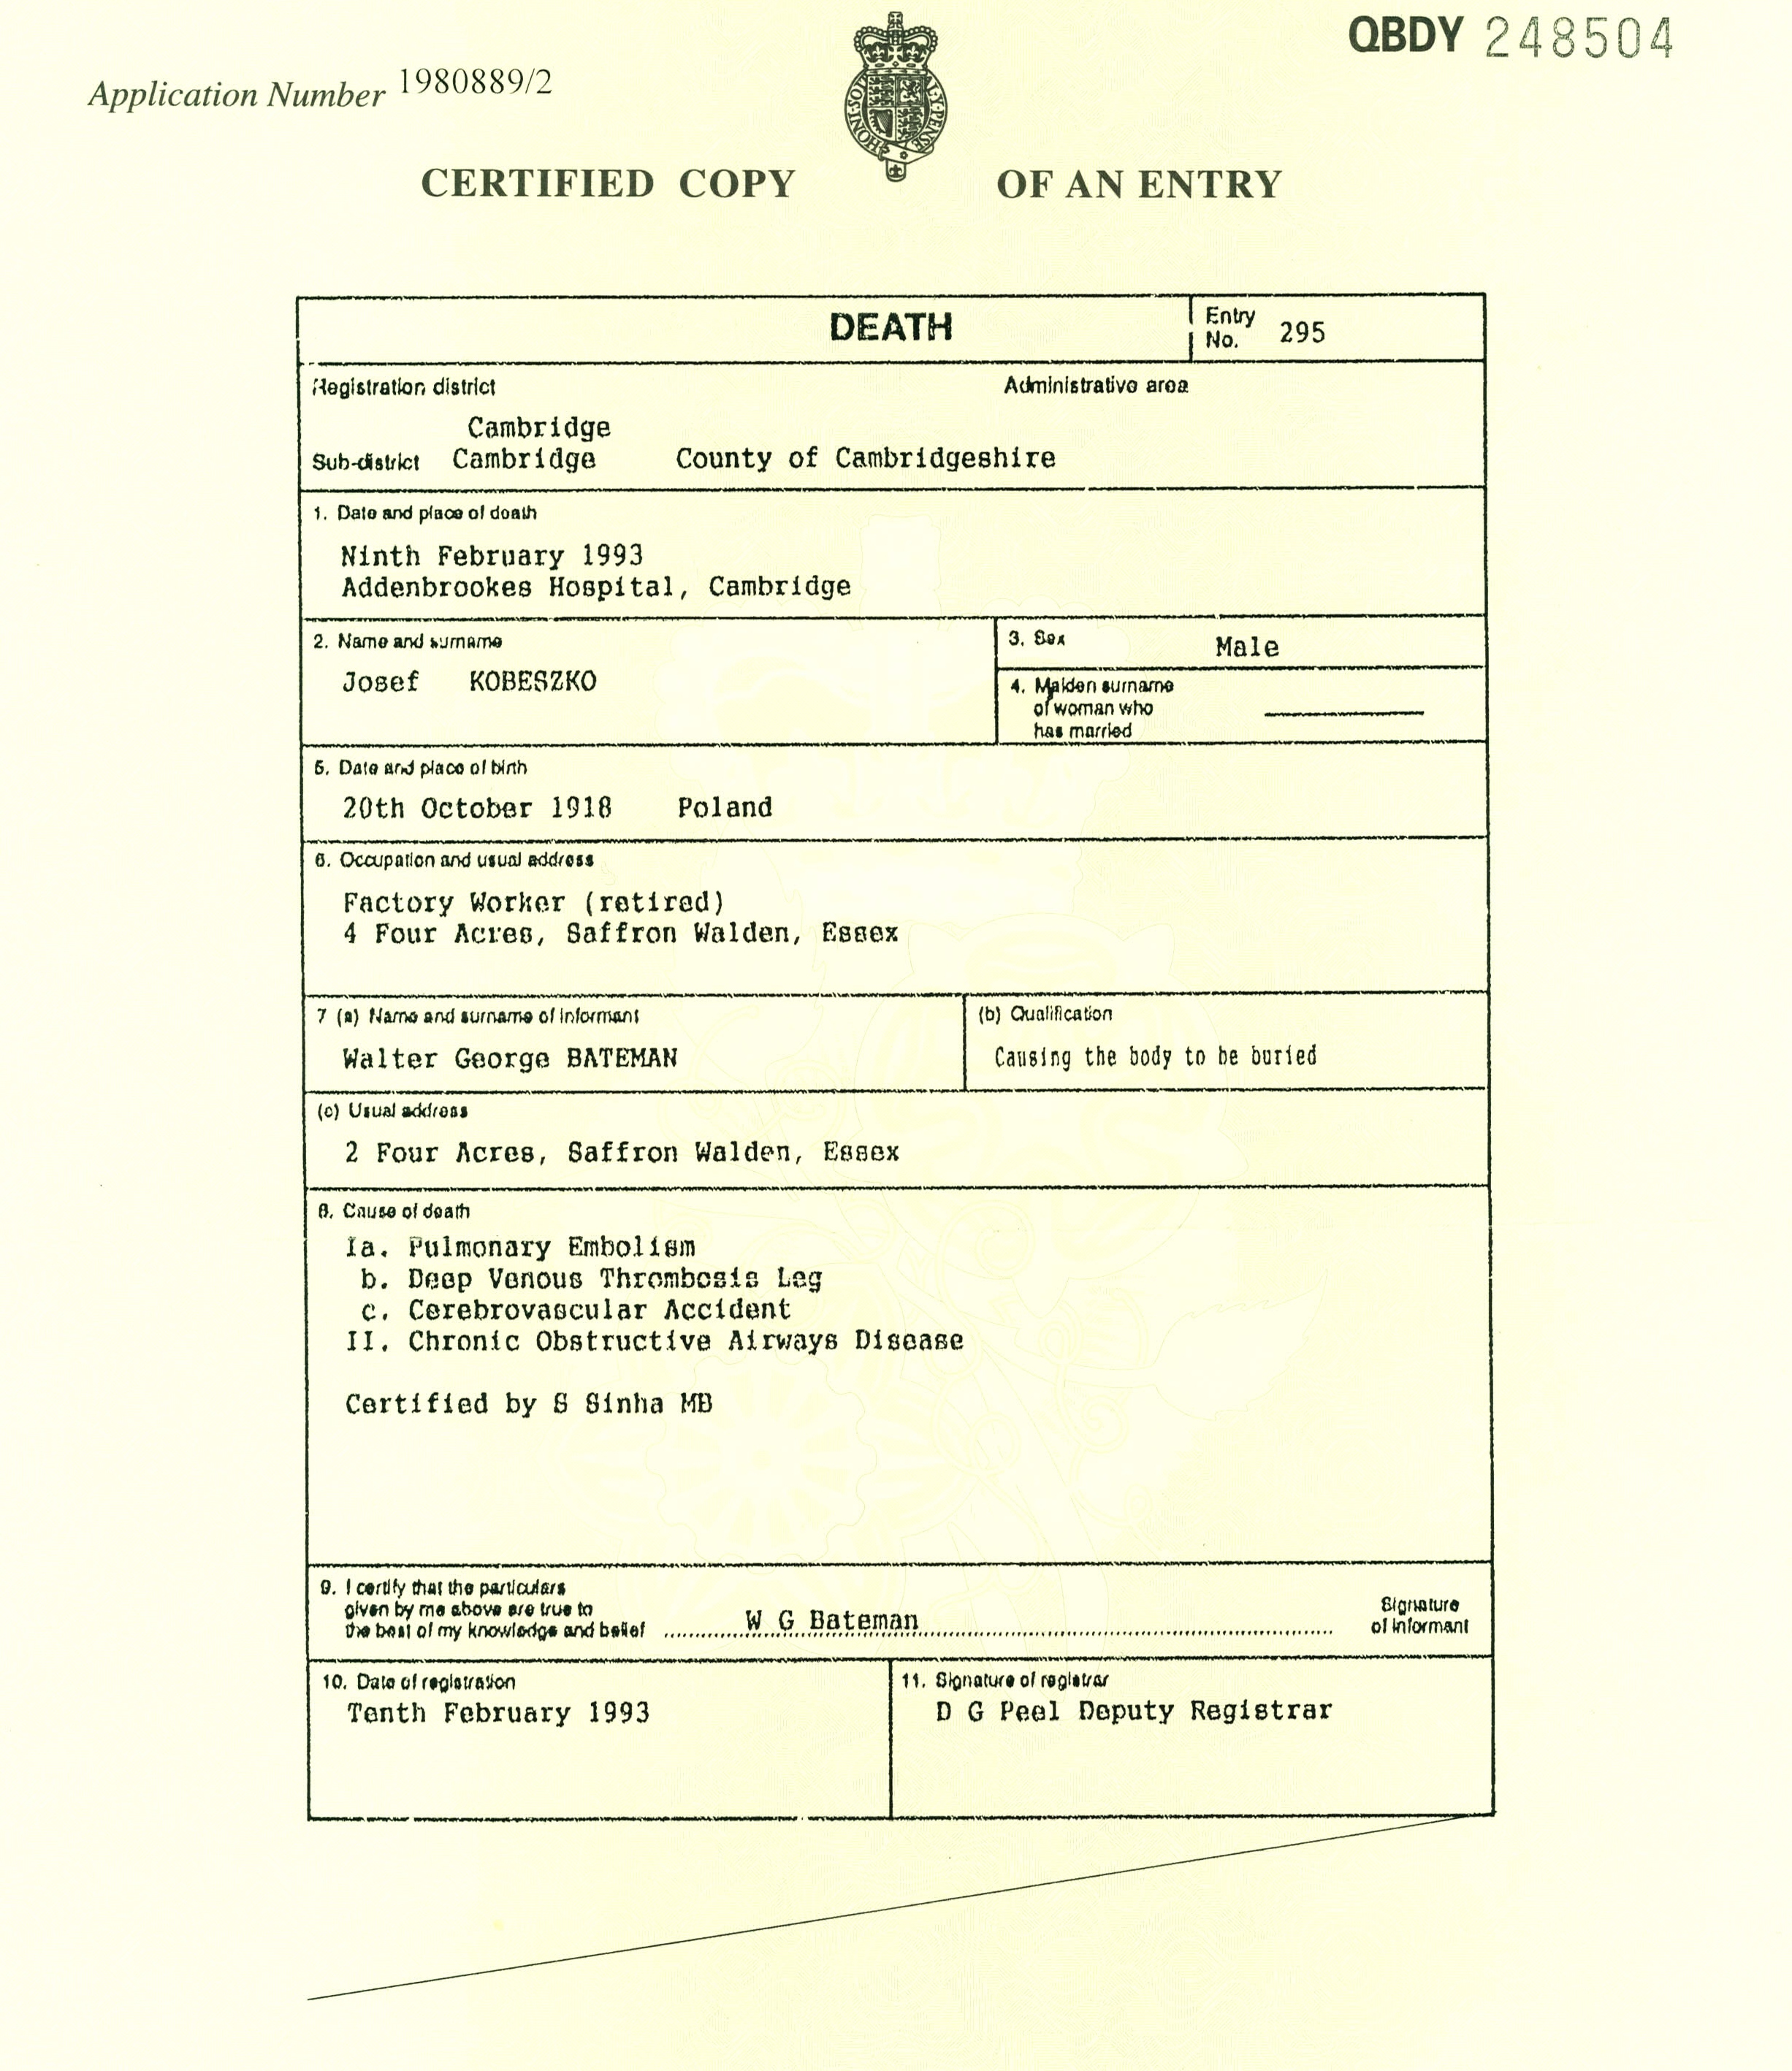 josef kobeszko death certificate.jpg